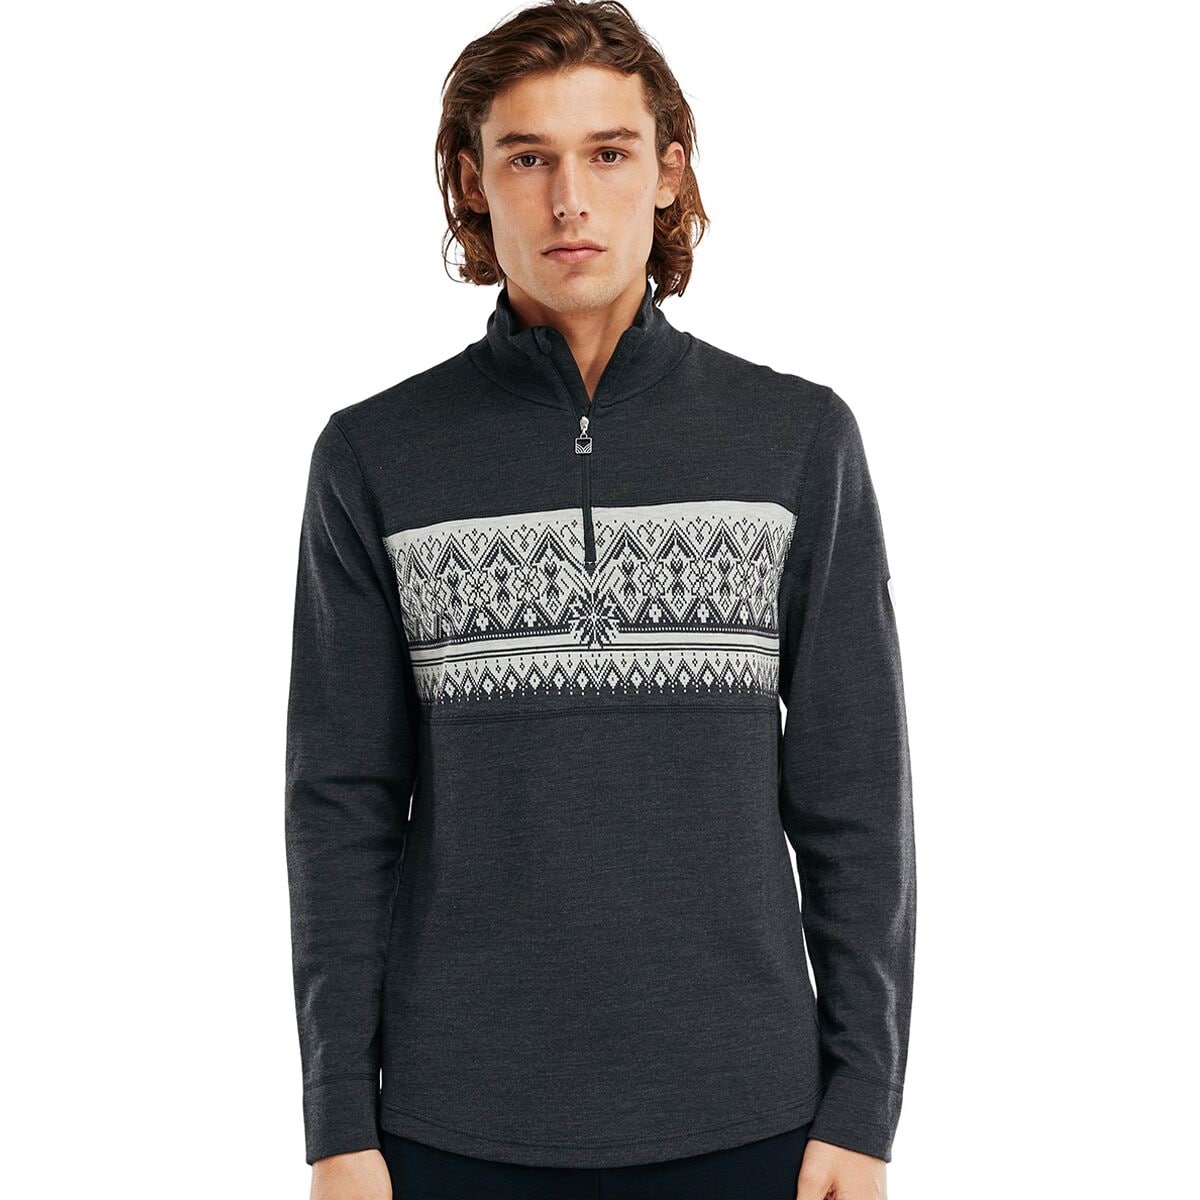 Dale of Norway Moritz Basic Sweater - Men's